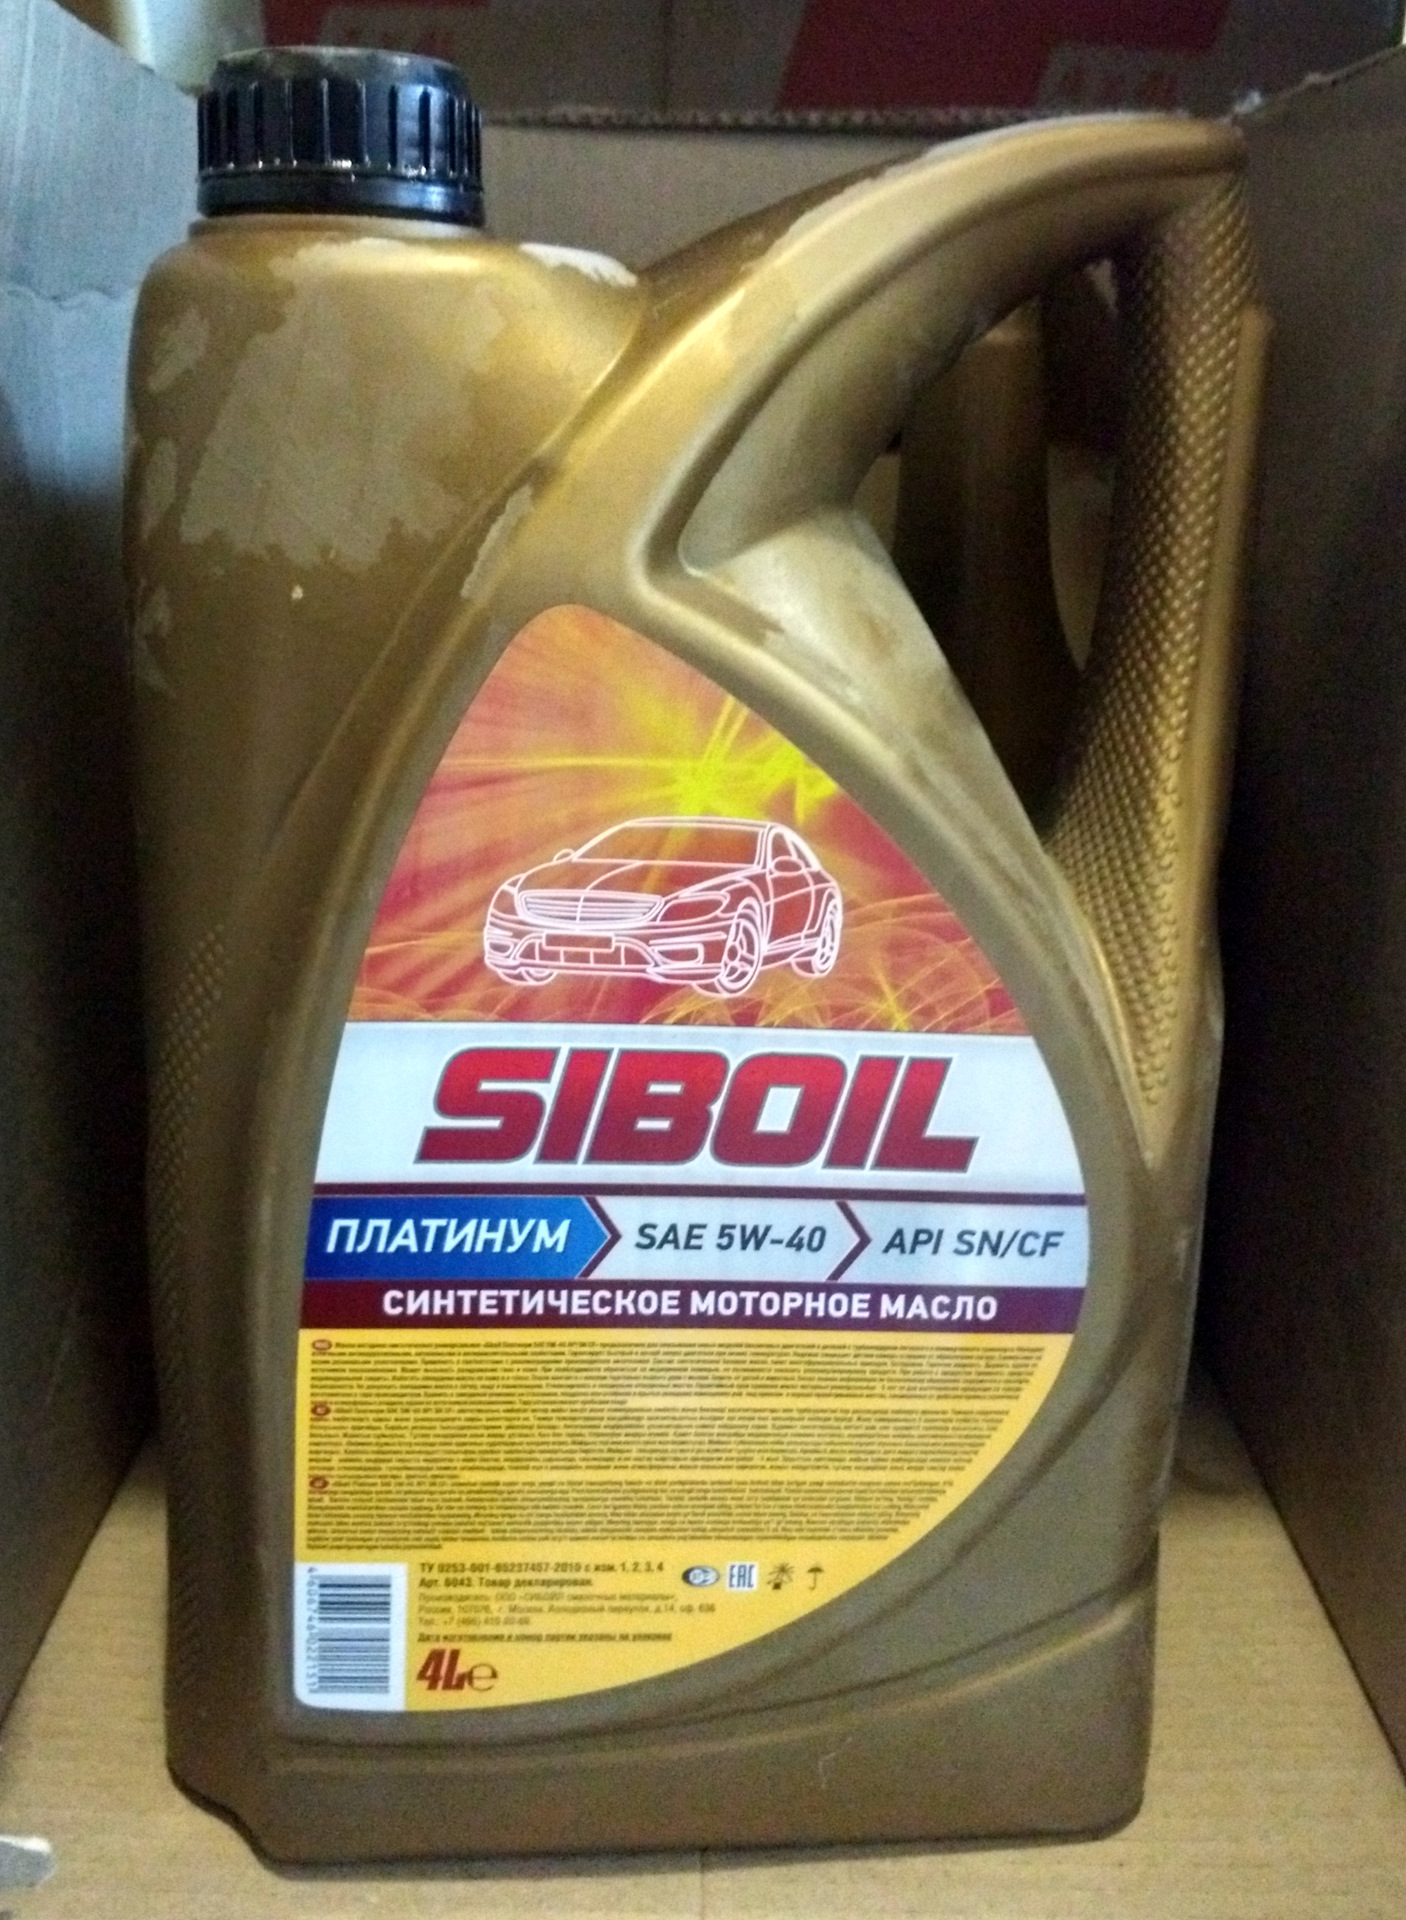 Цены масло 10в40. Моторное масло Сибойл 5w 40. Масло Siboil 5w-40 светофор. Масло моторное Sintec ( 5w40 .SAE Synt. 4 Л.). Масло Сибойл супер полусинтетика.